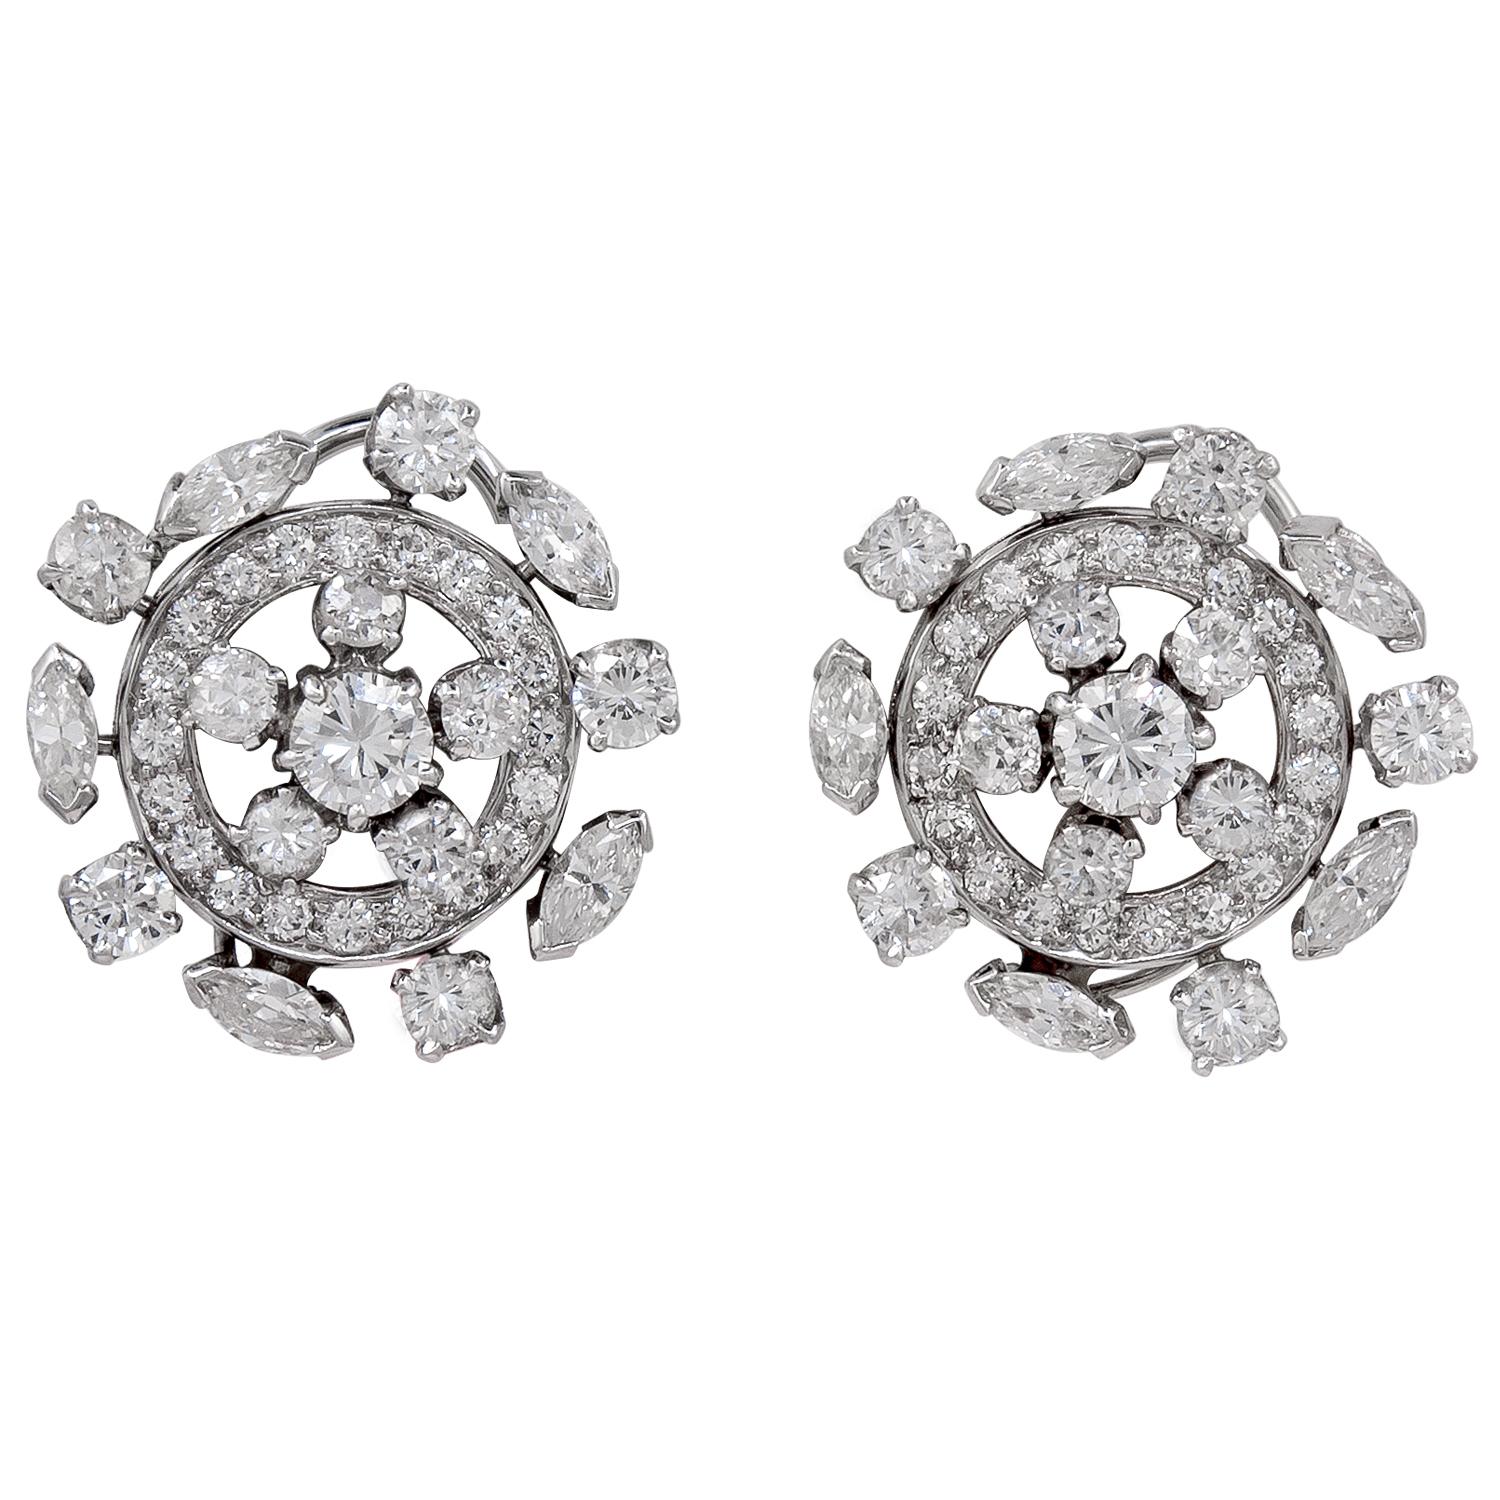 Two Tone Mixed Cut Diamond Earrings